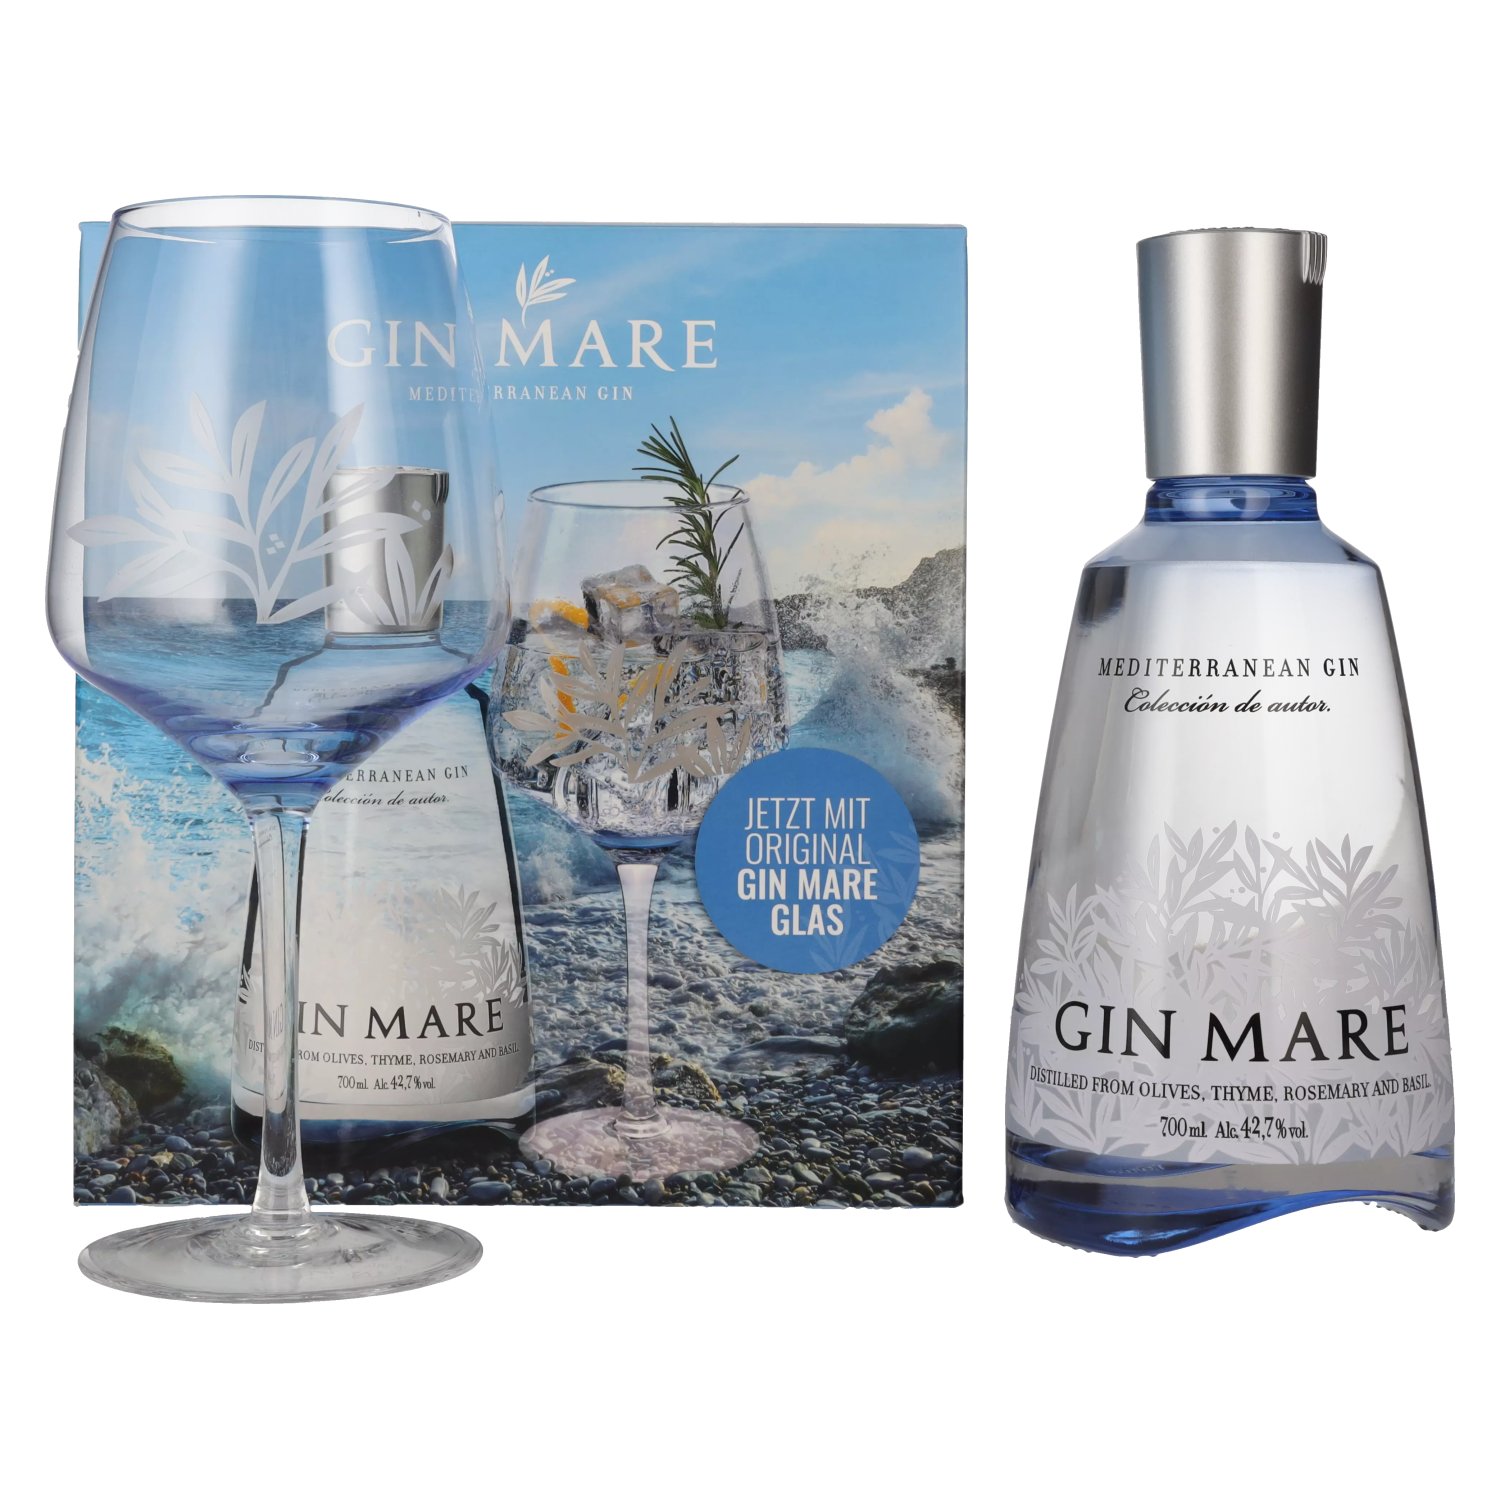 Gin Mare Mediterranean Gin 42,7% with Vol. glass Giftbox in 0,7l